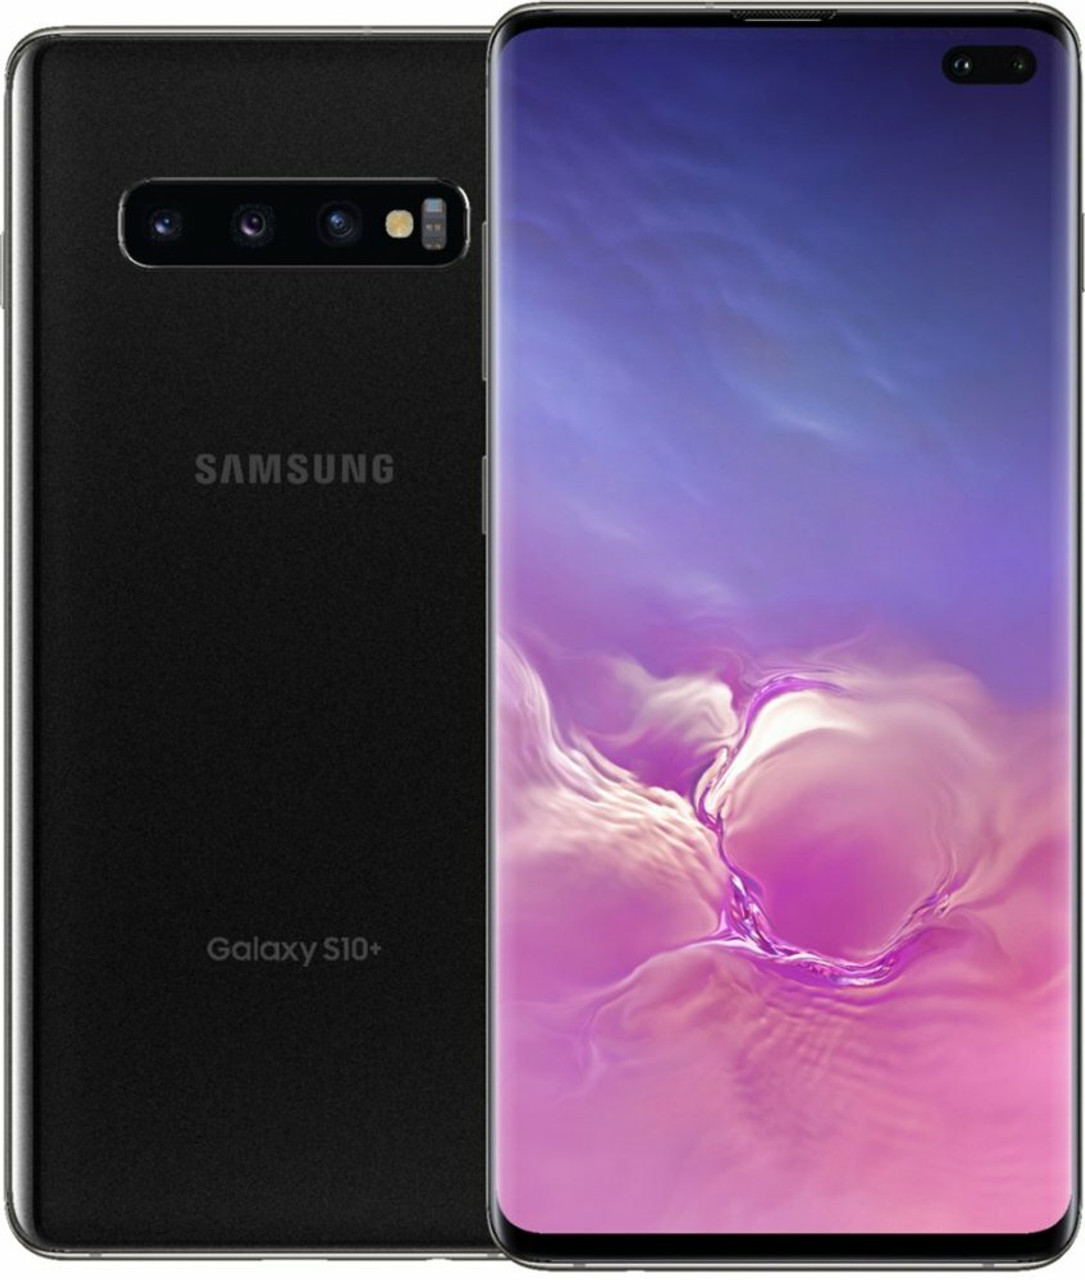 SIMフリー】Galaxy S10e 128GB スペースブラック - スマートフォン本体